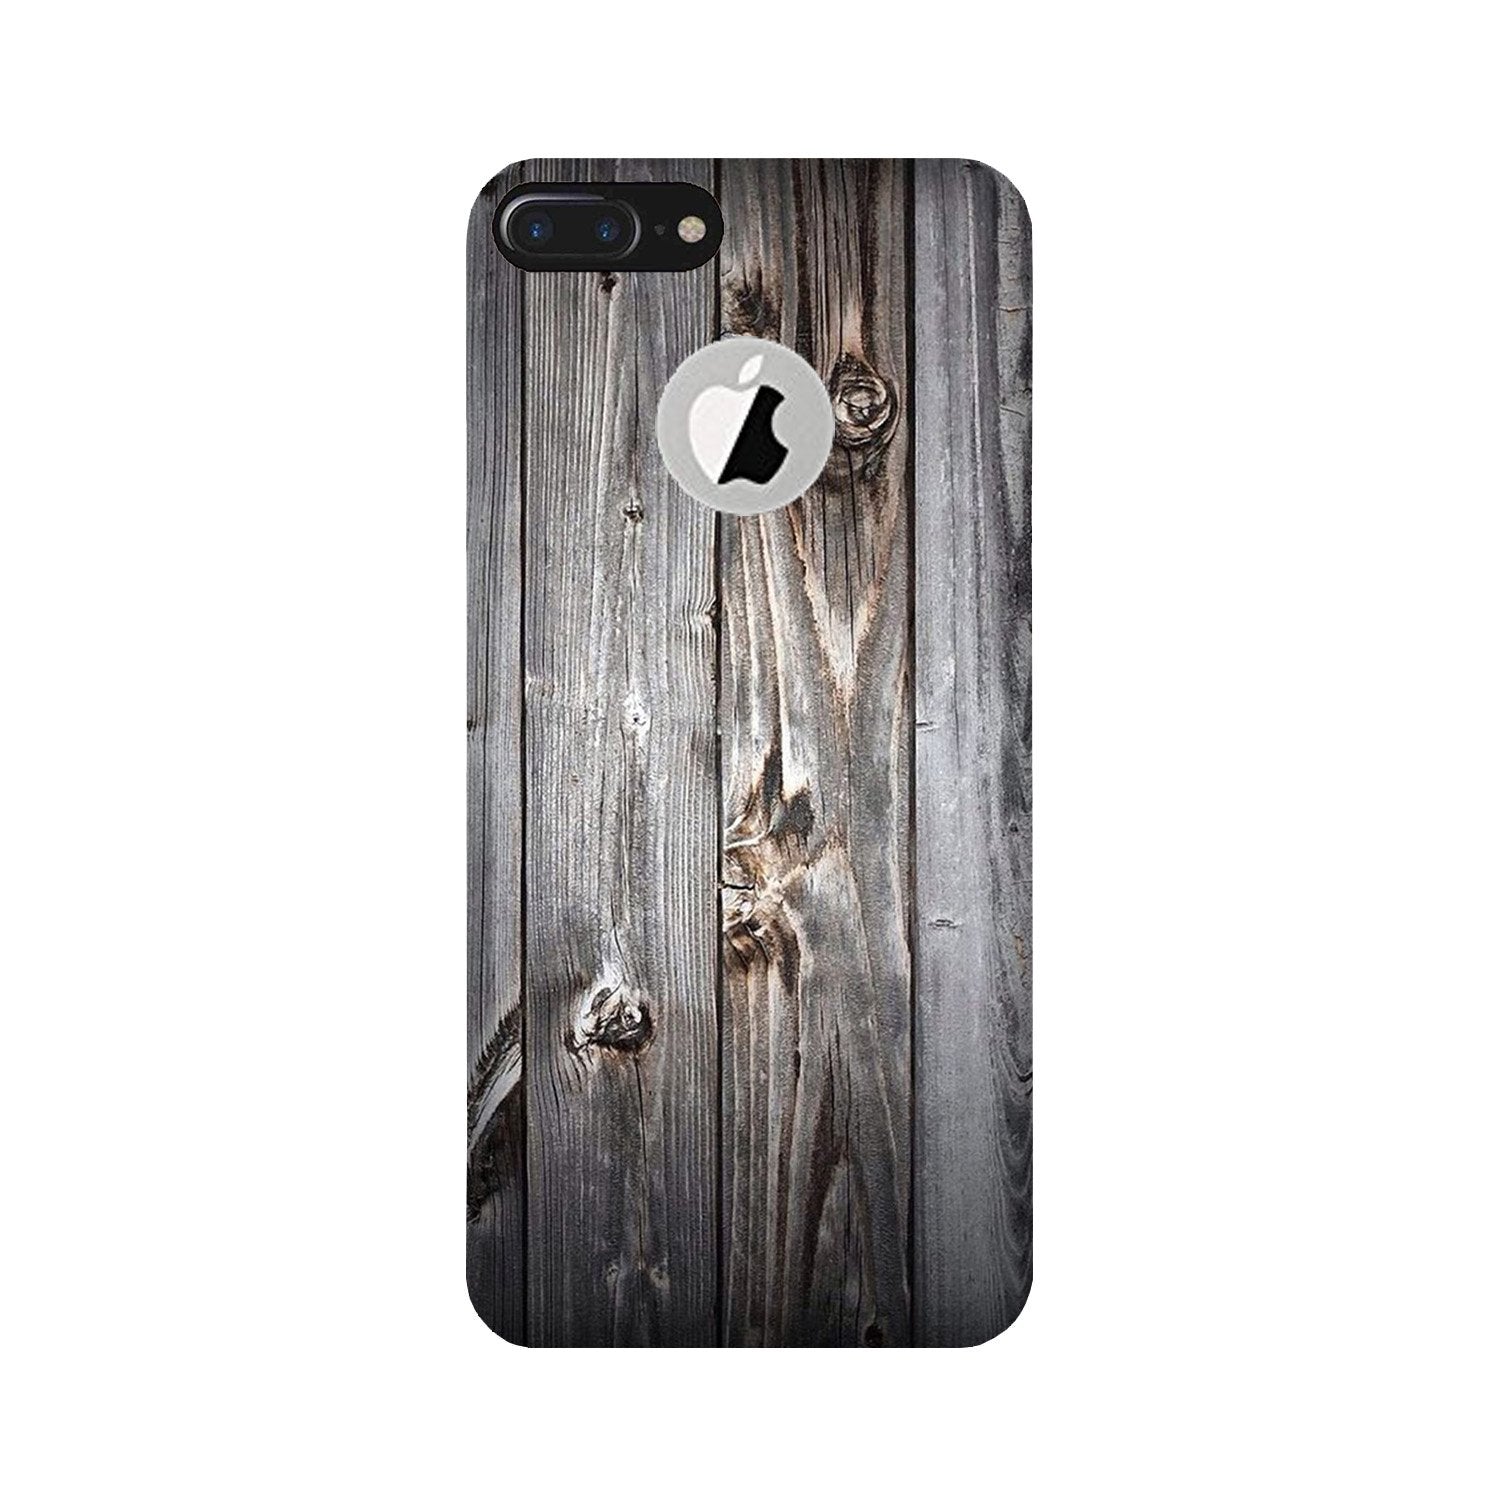 Wooden Look Case for iPhone 7 Plus logo cut(Design - 114)